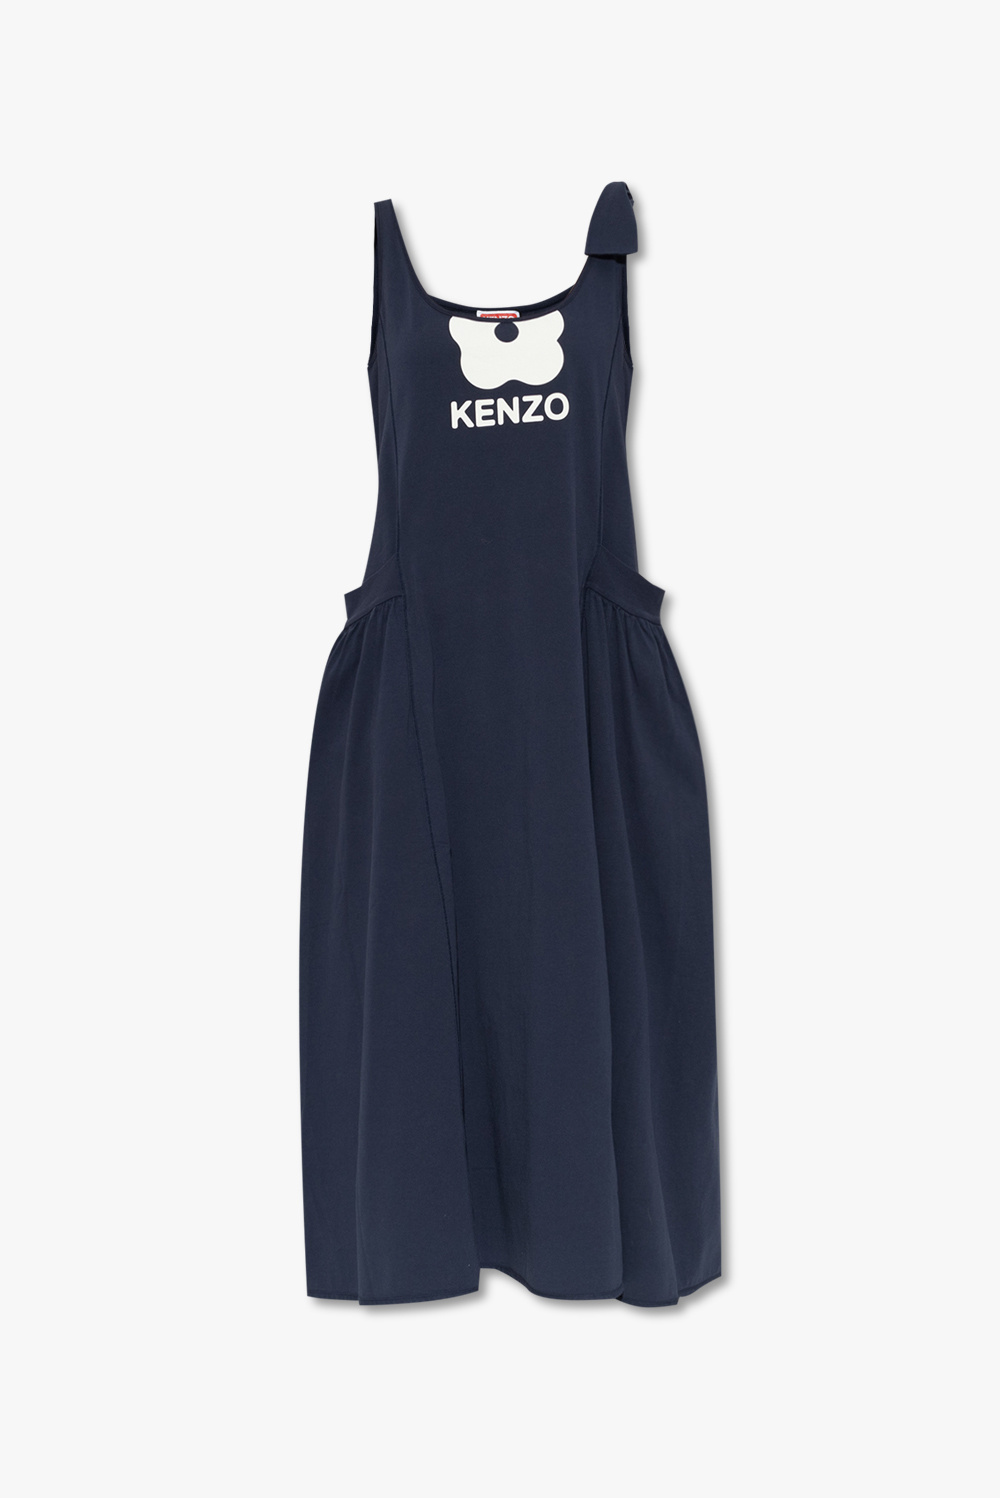 Kenzo Oversize dress